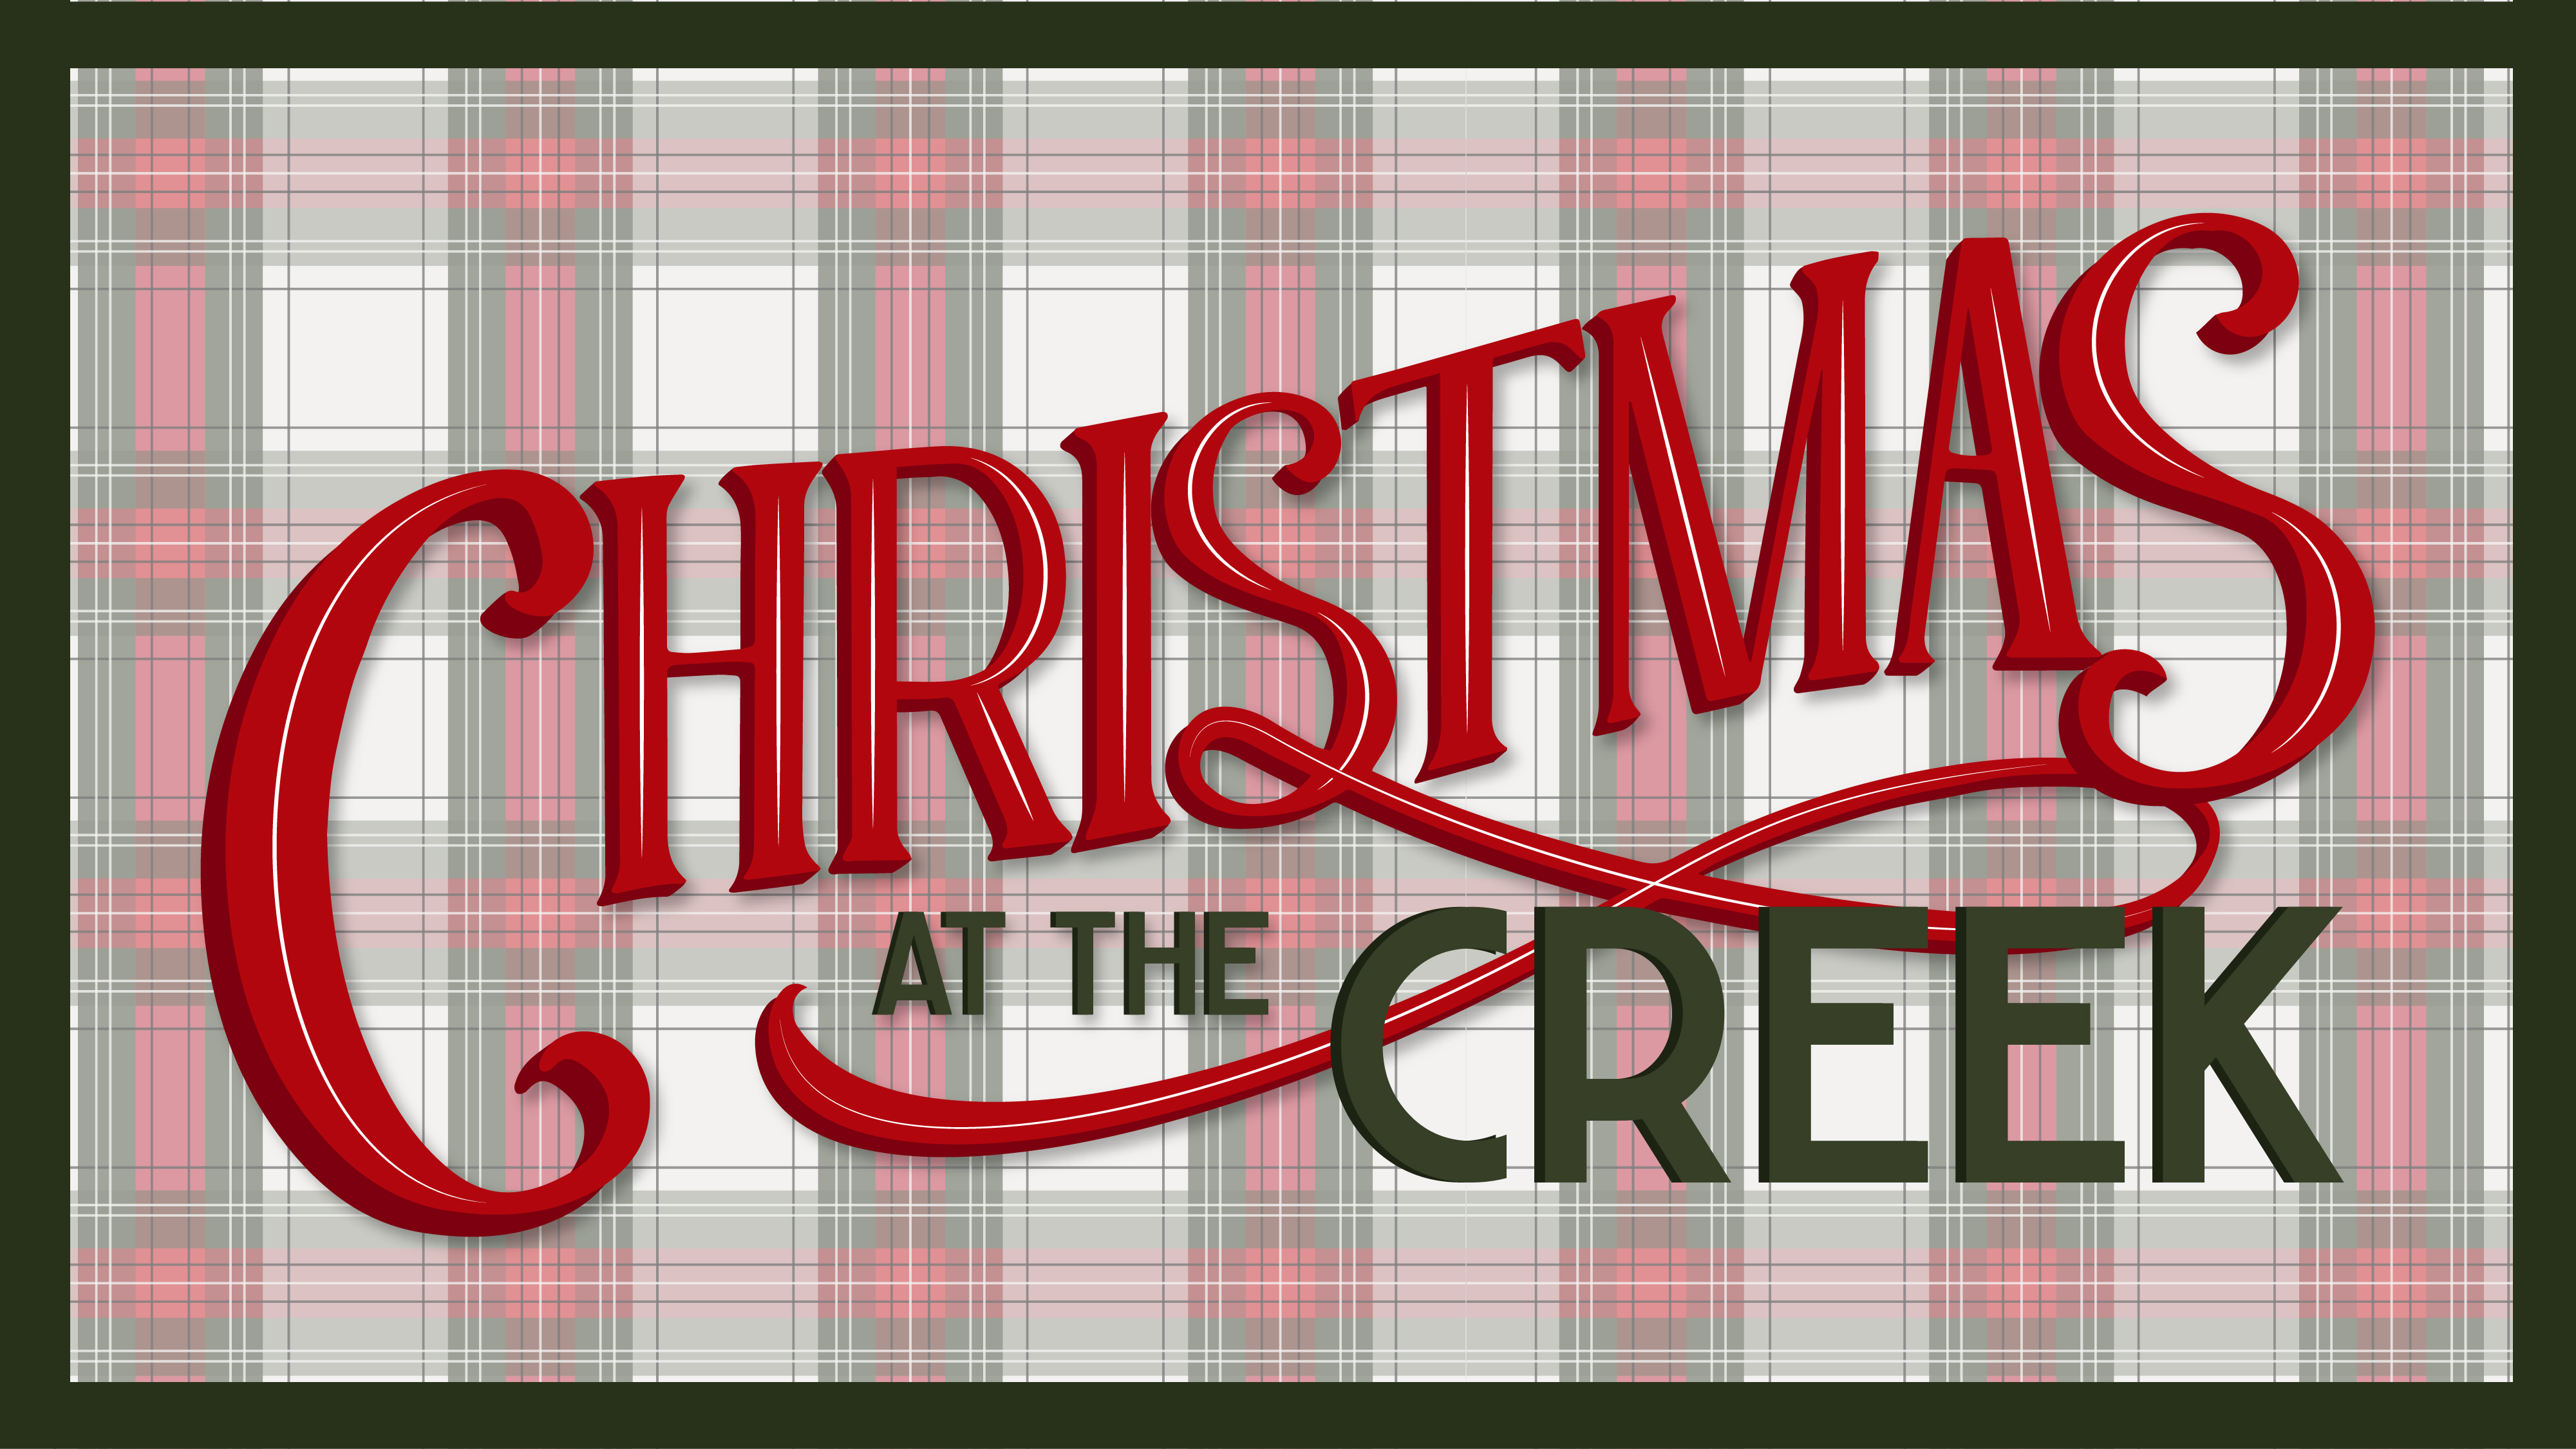 Cottonwood Creek - Christmas at the Creek Series